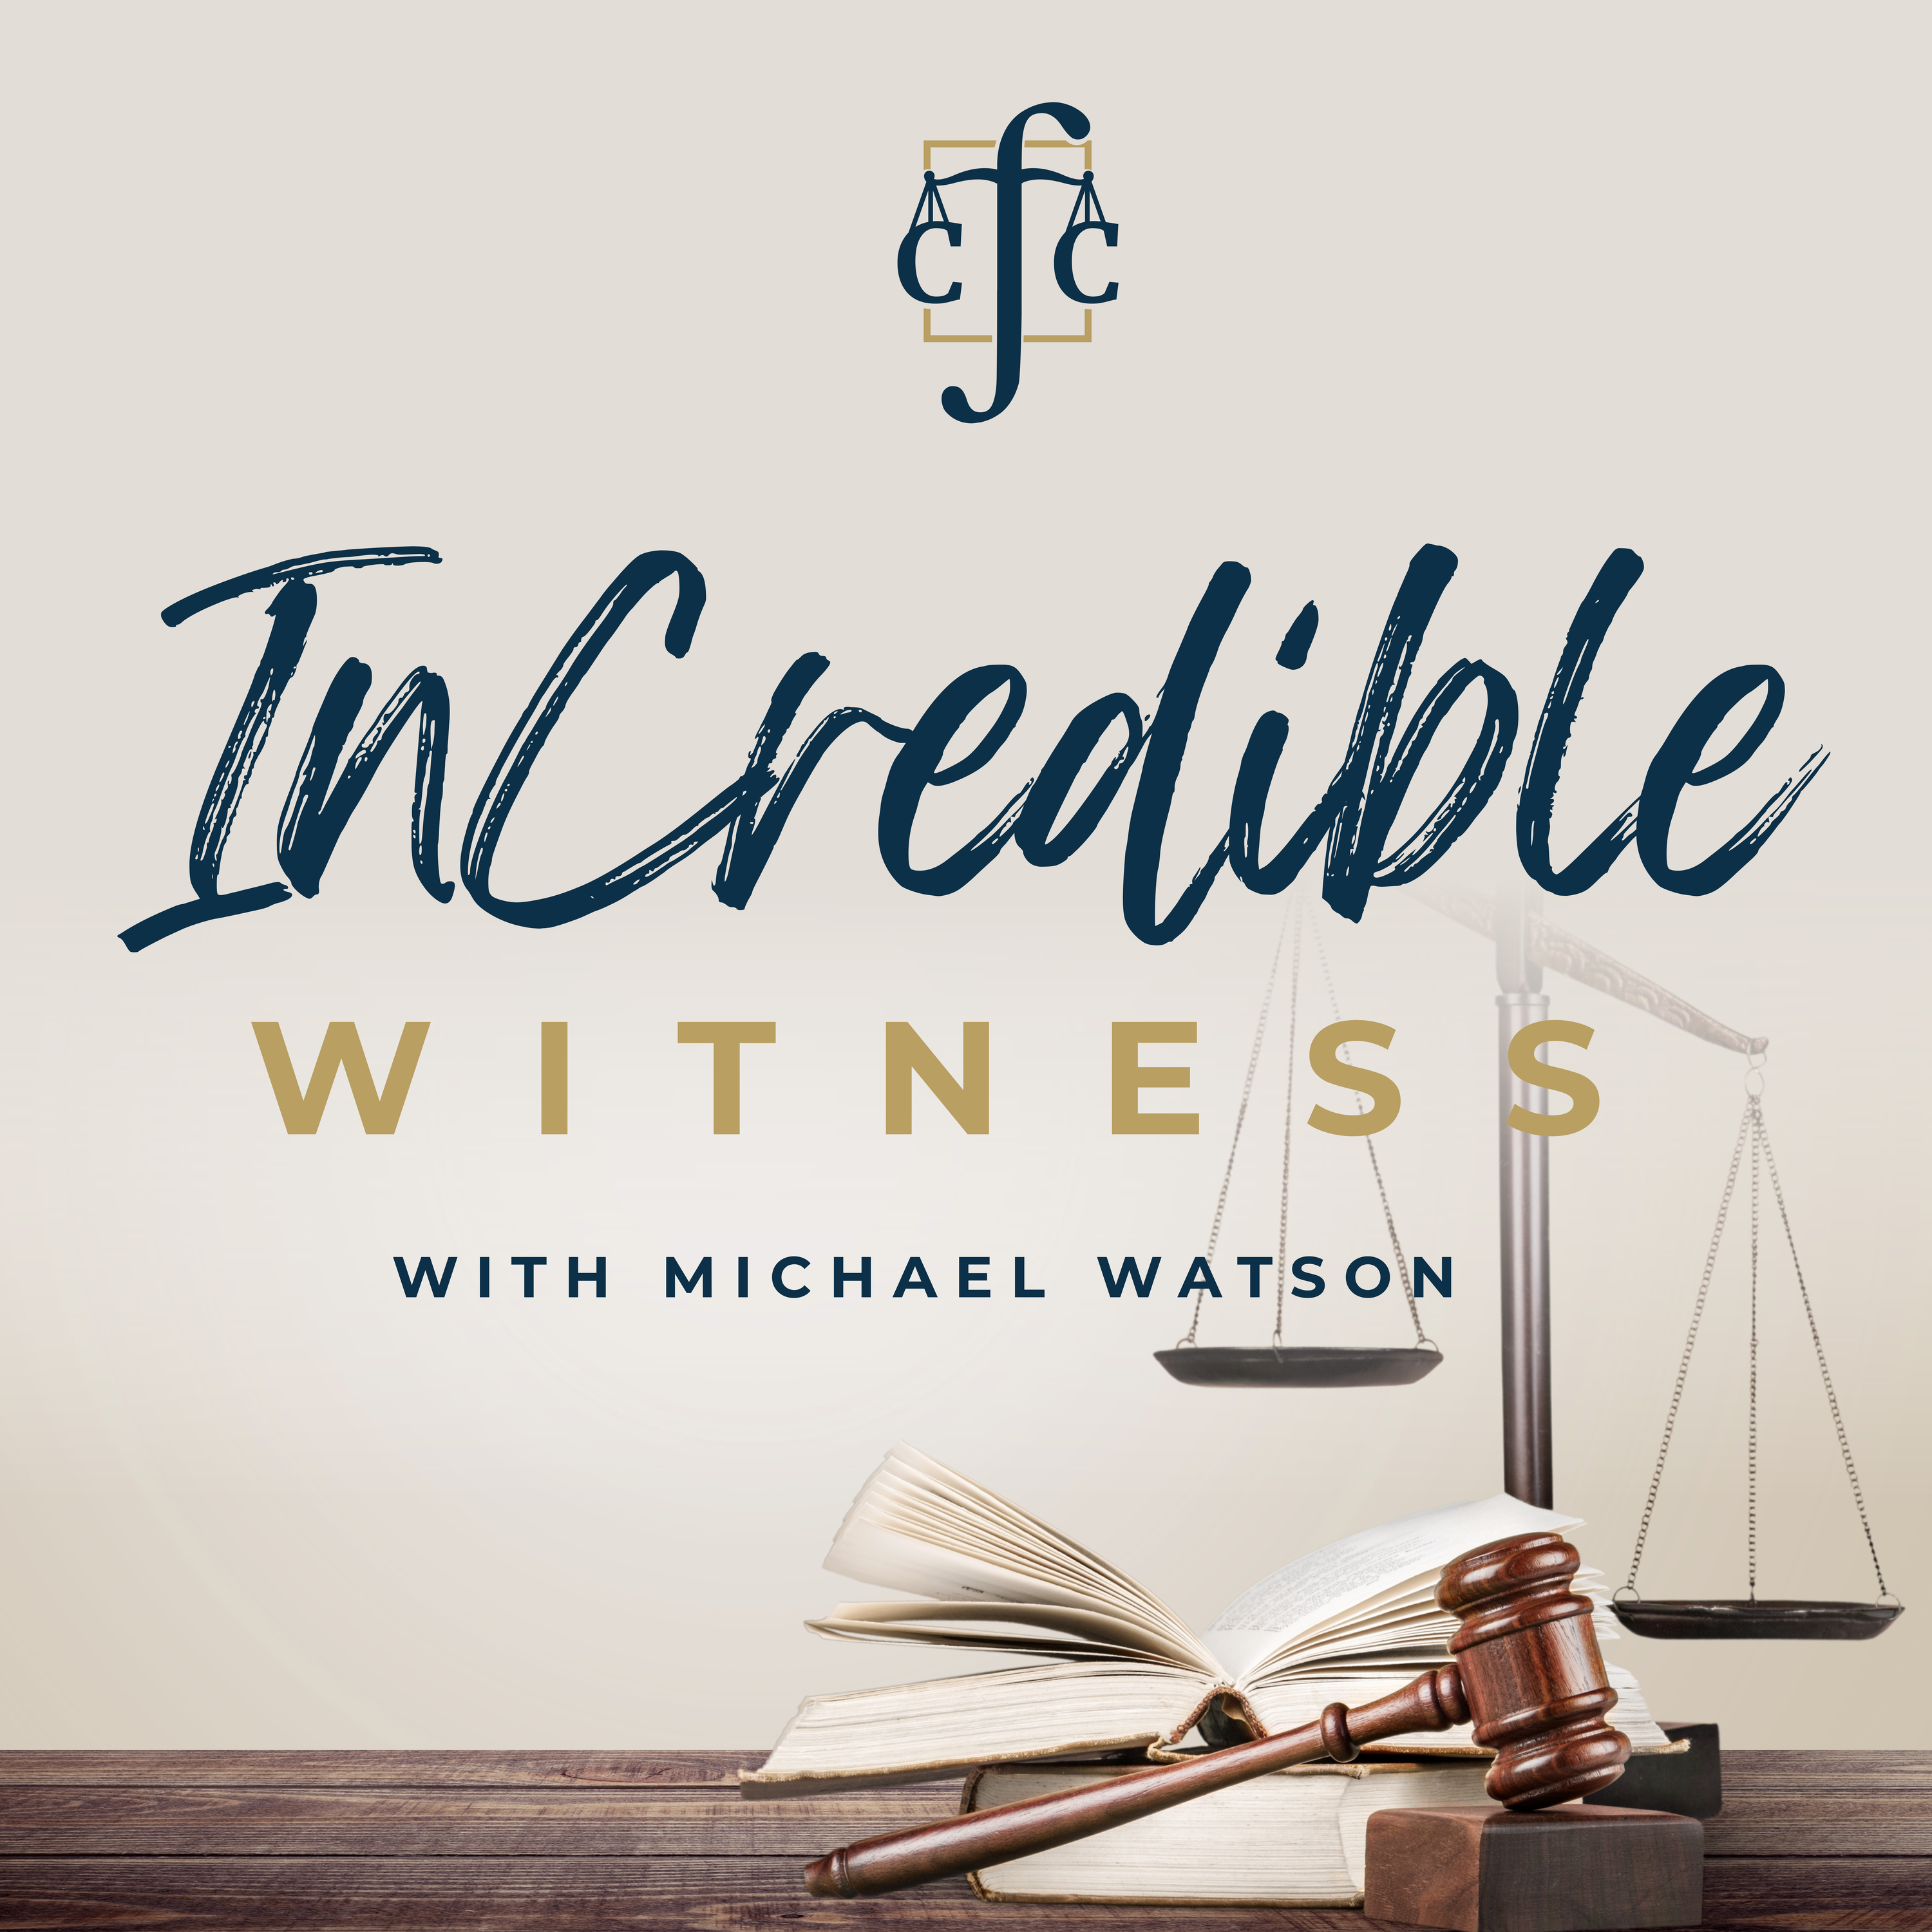 InCredible Witness